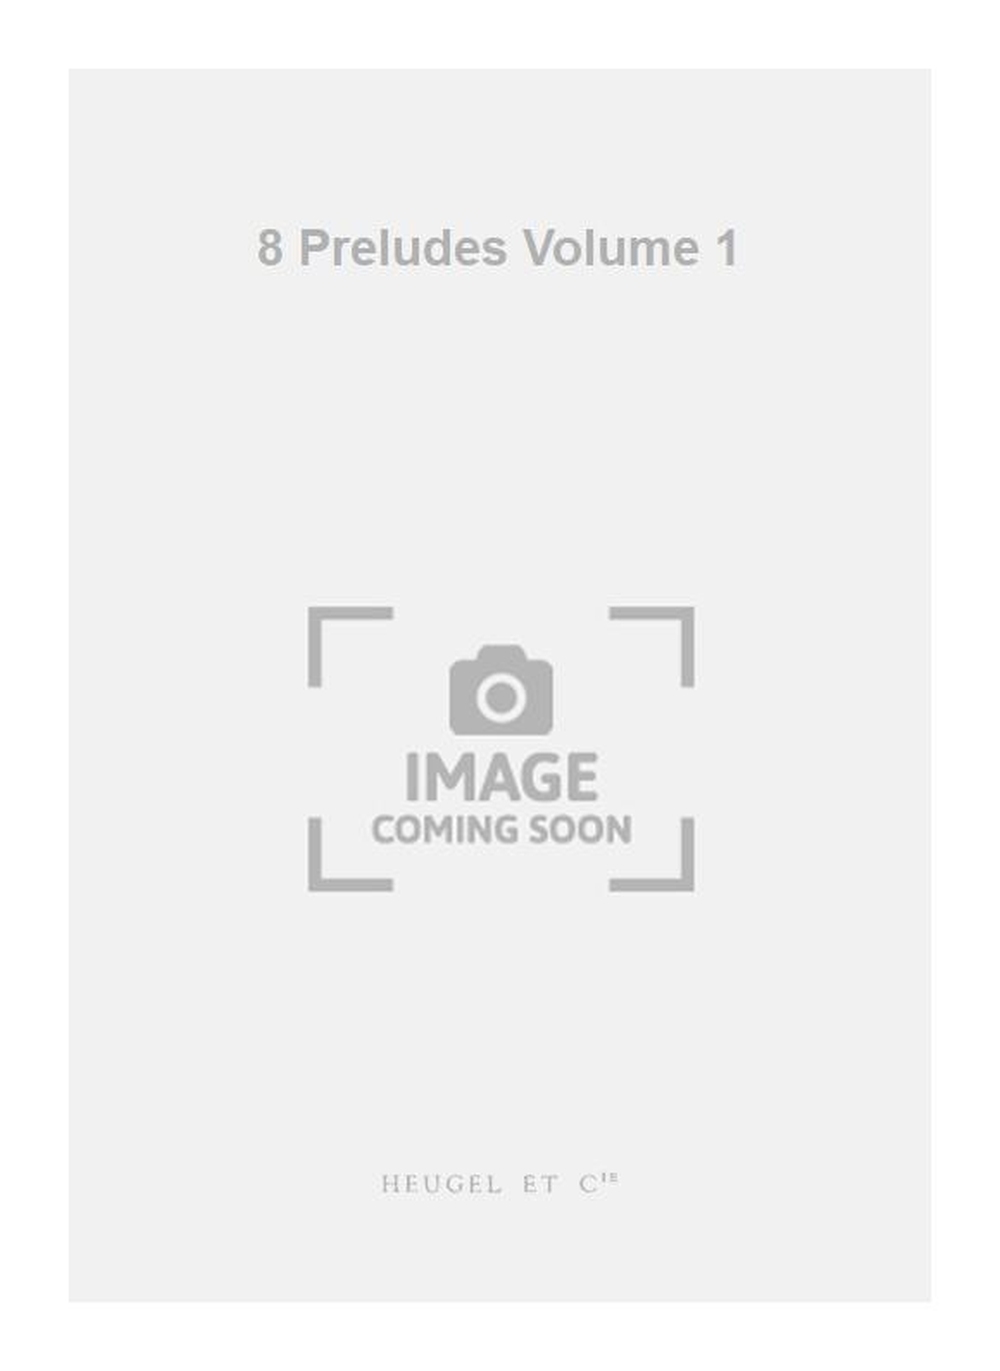 Pierre Revel: 8 Preludes Volume 1